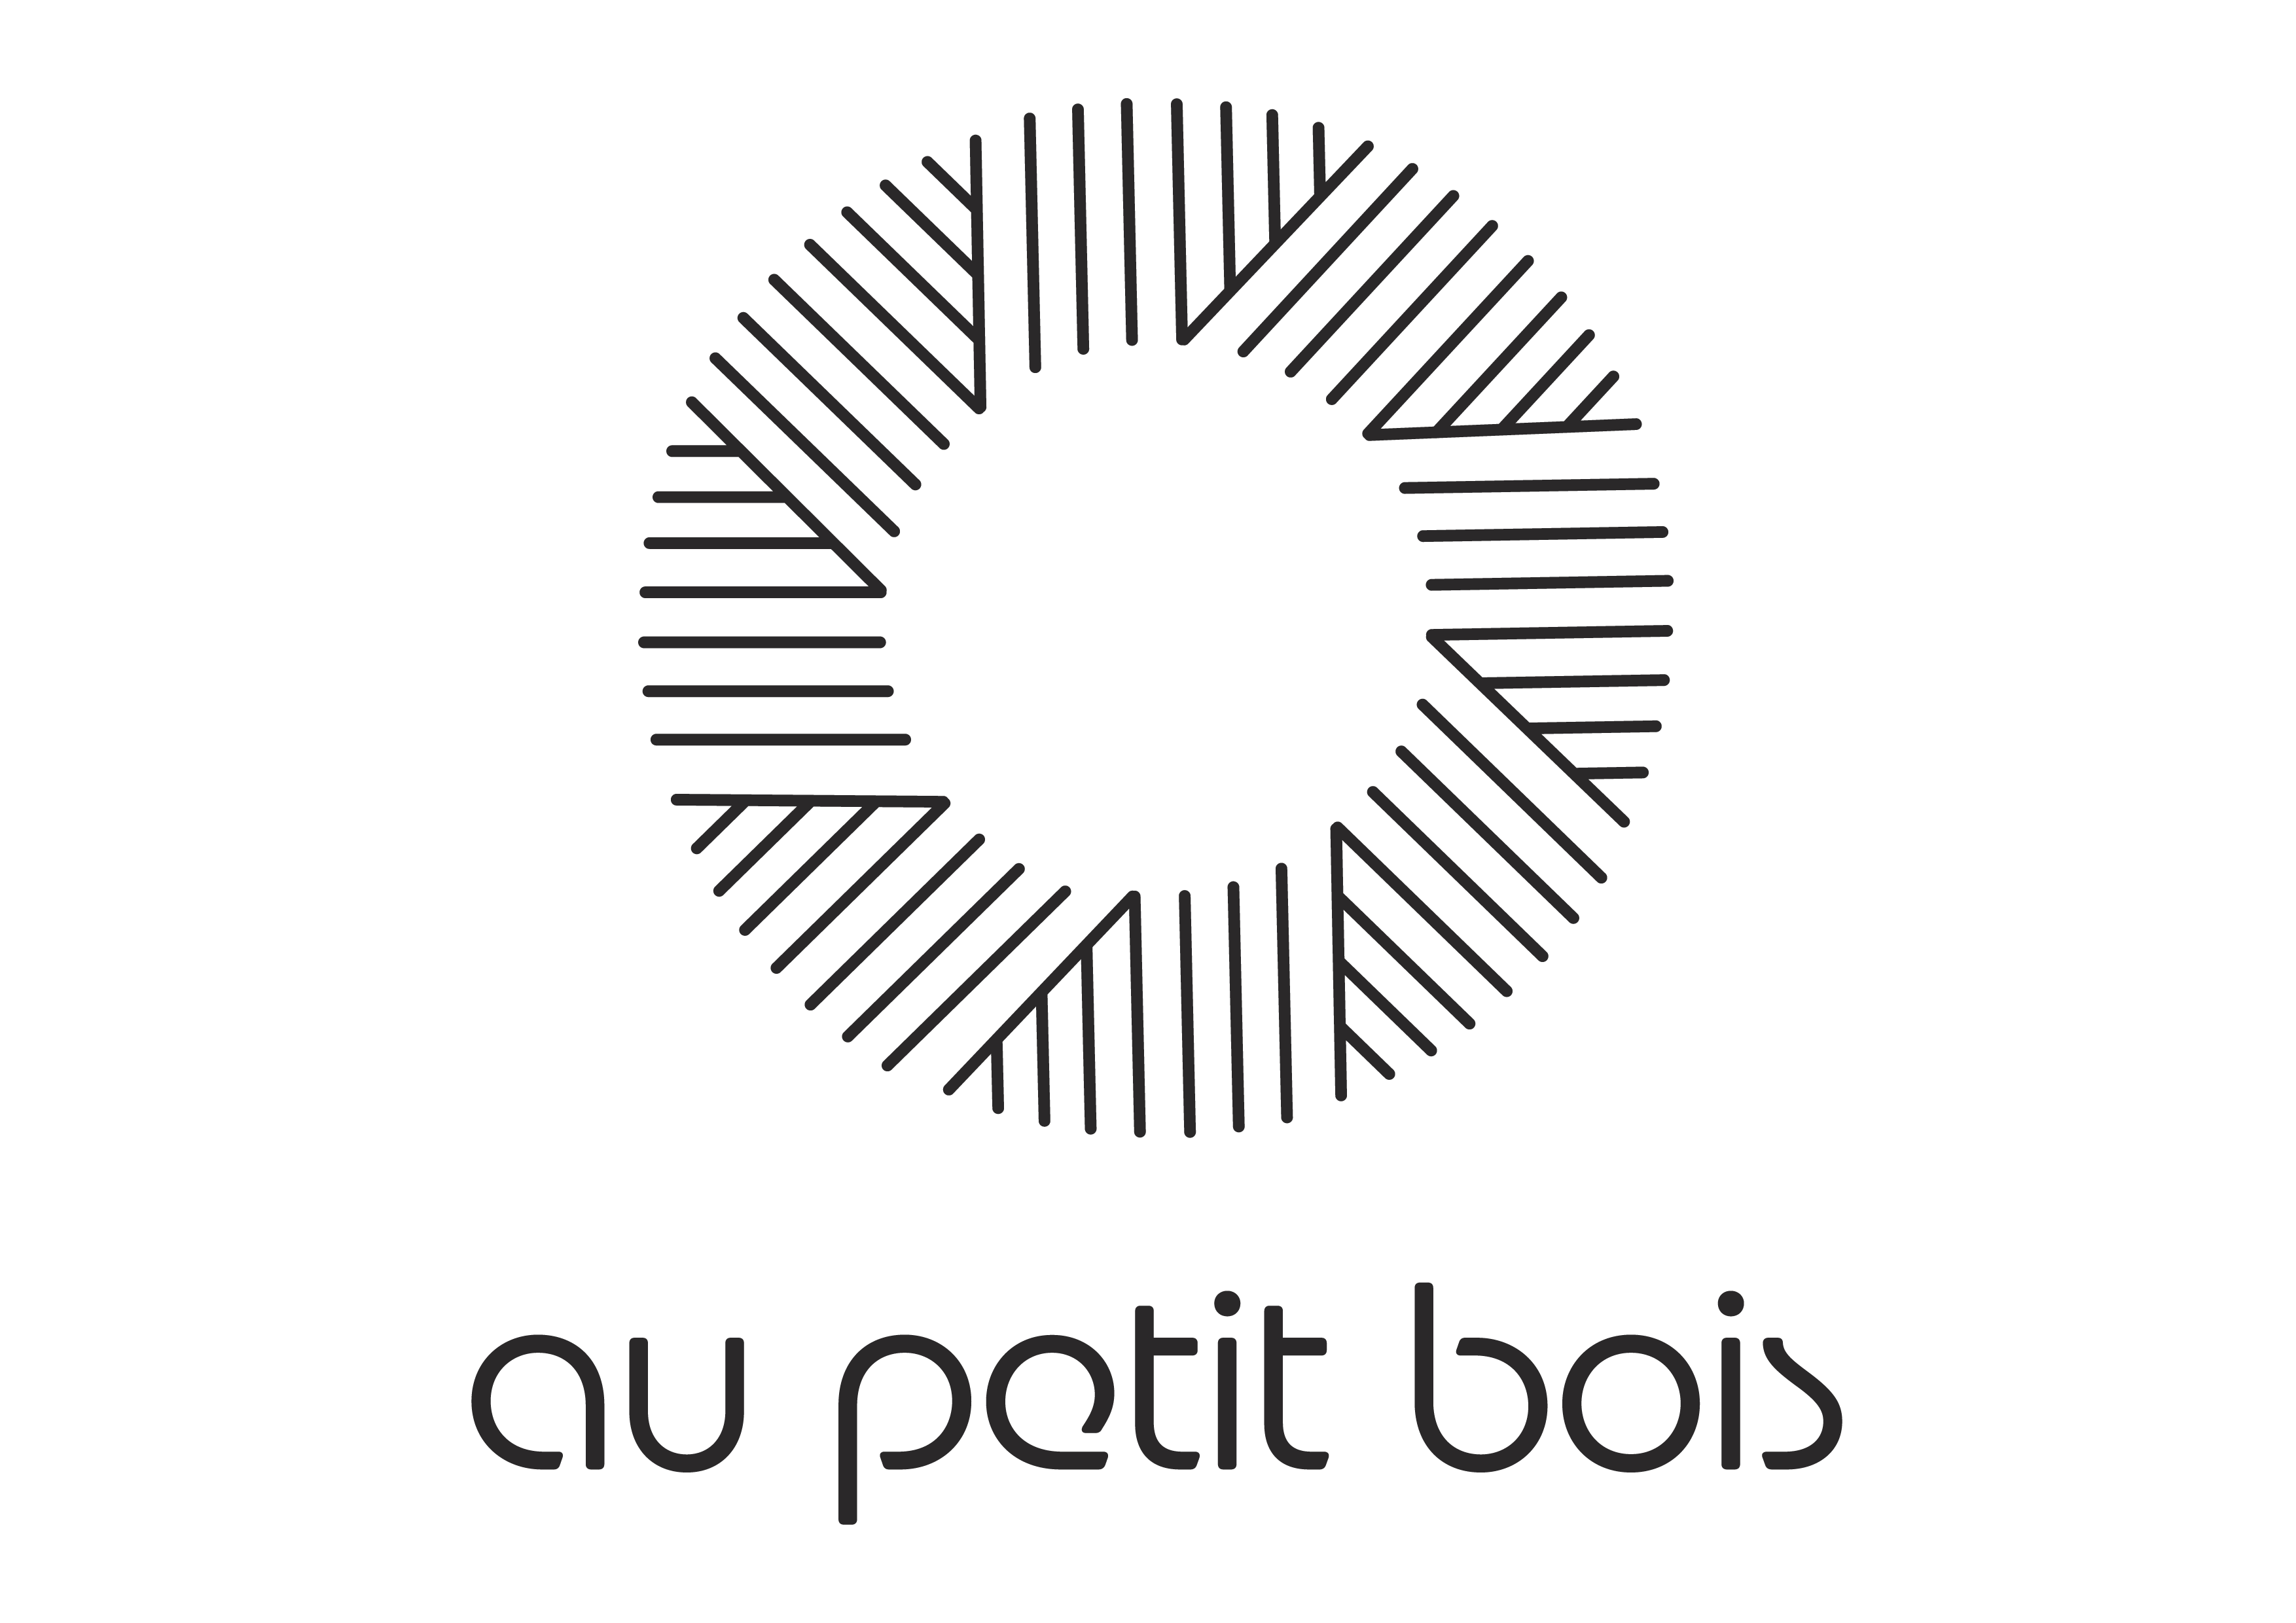 Logo APB